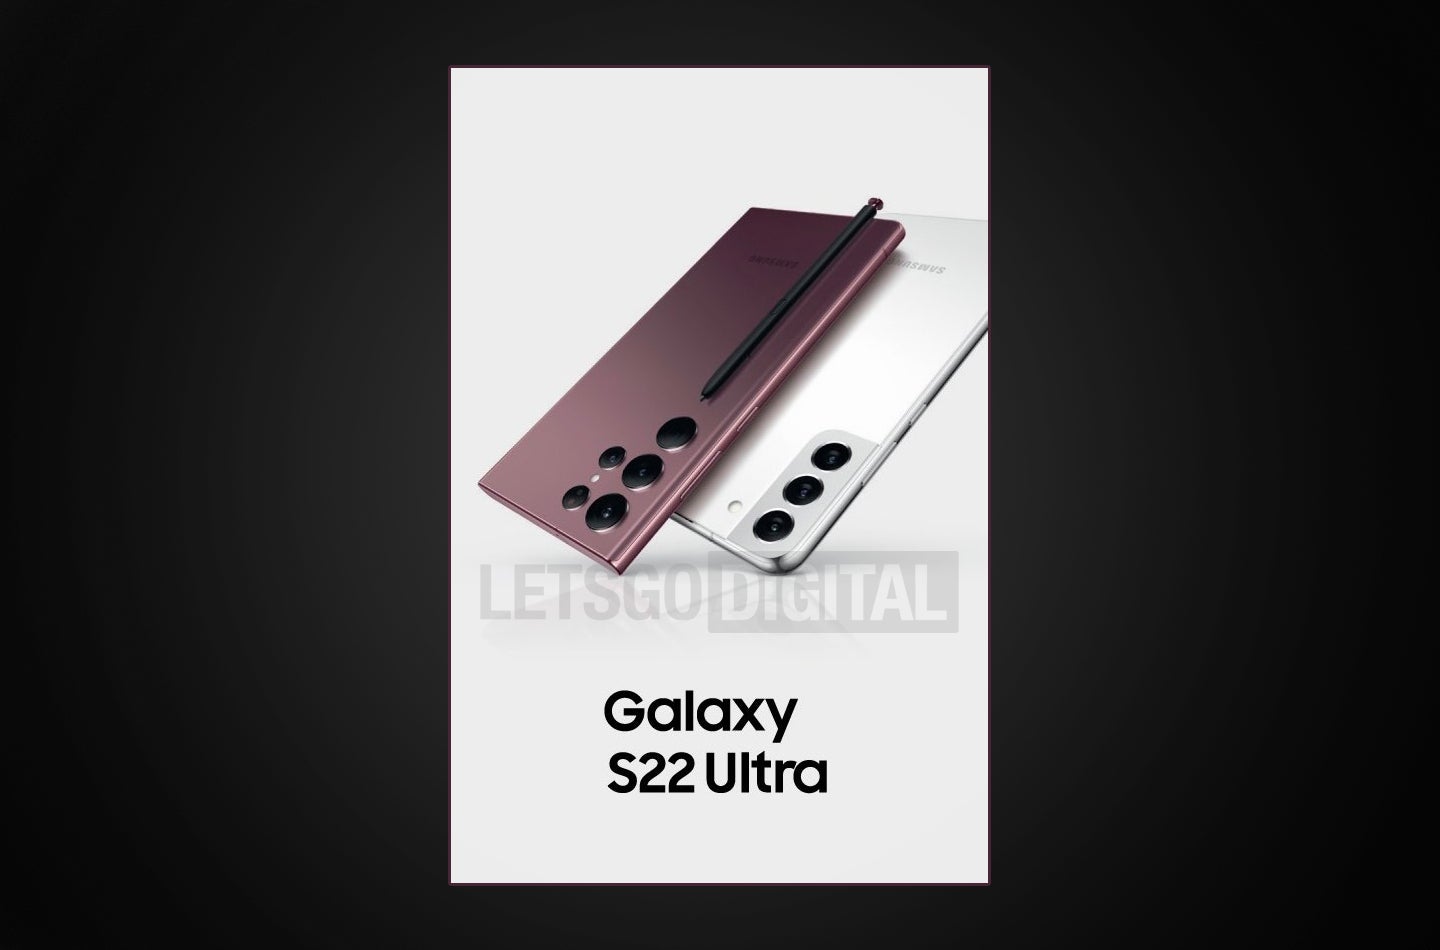 Samsung Galaxy S22 Ultra press materials leak online